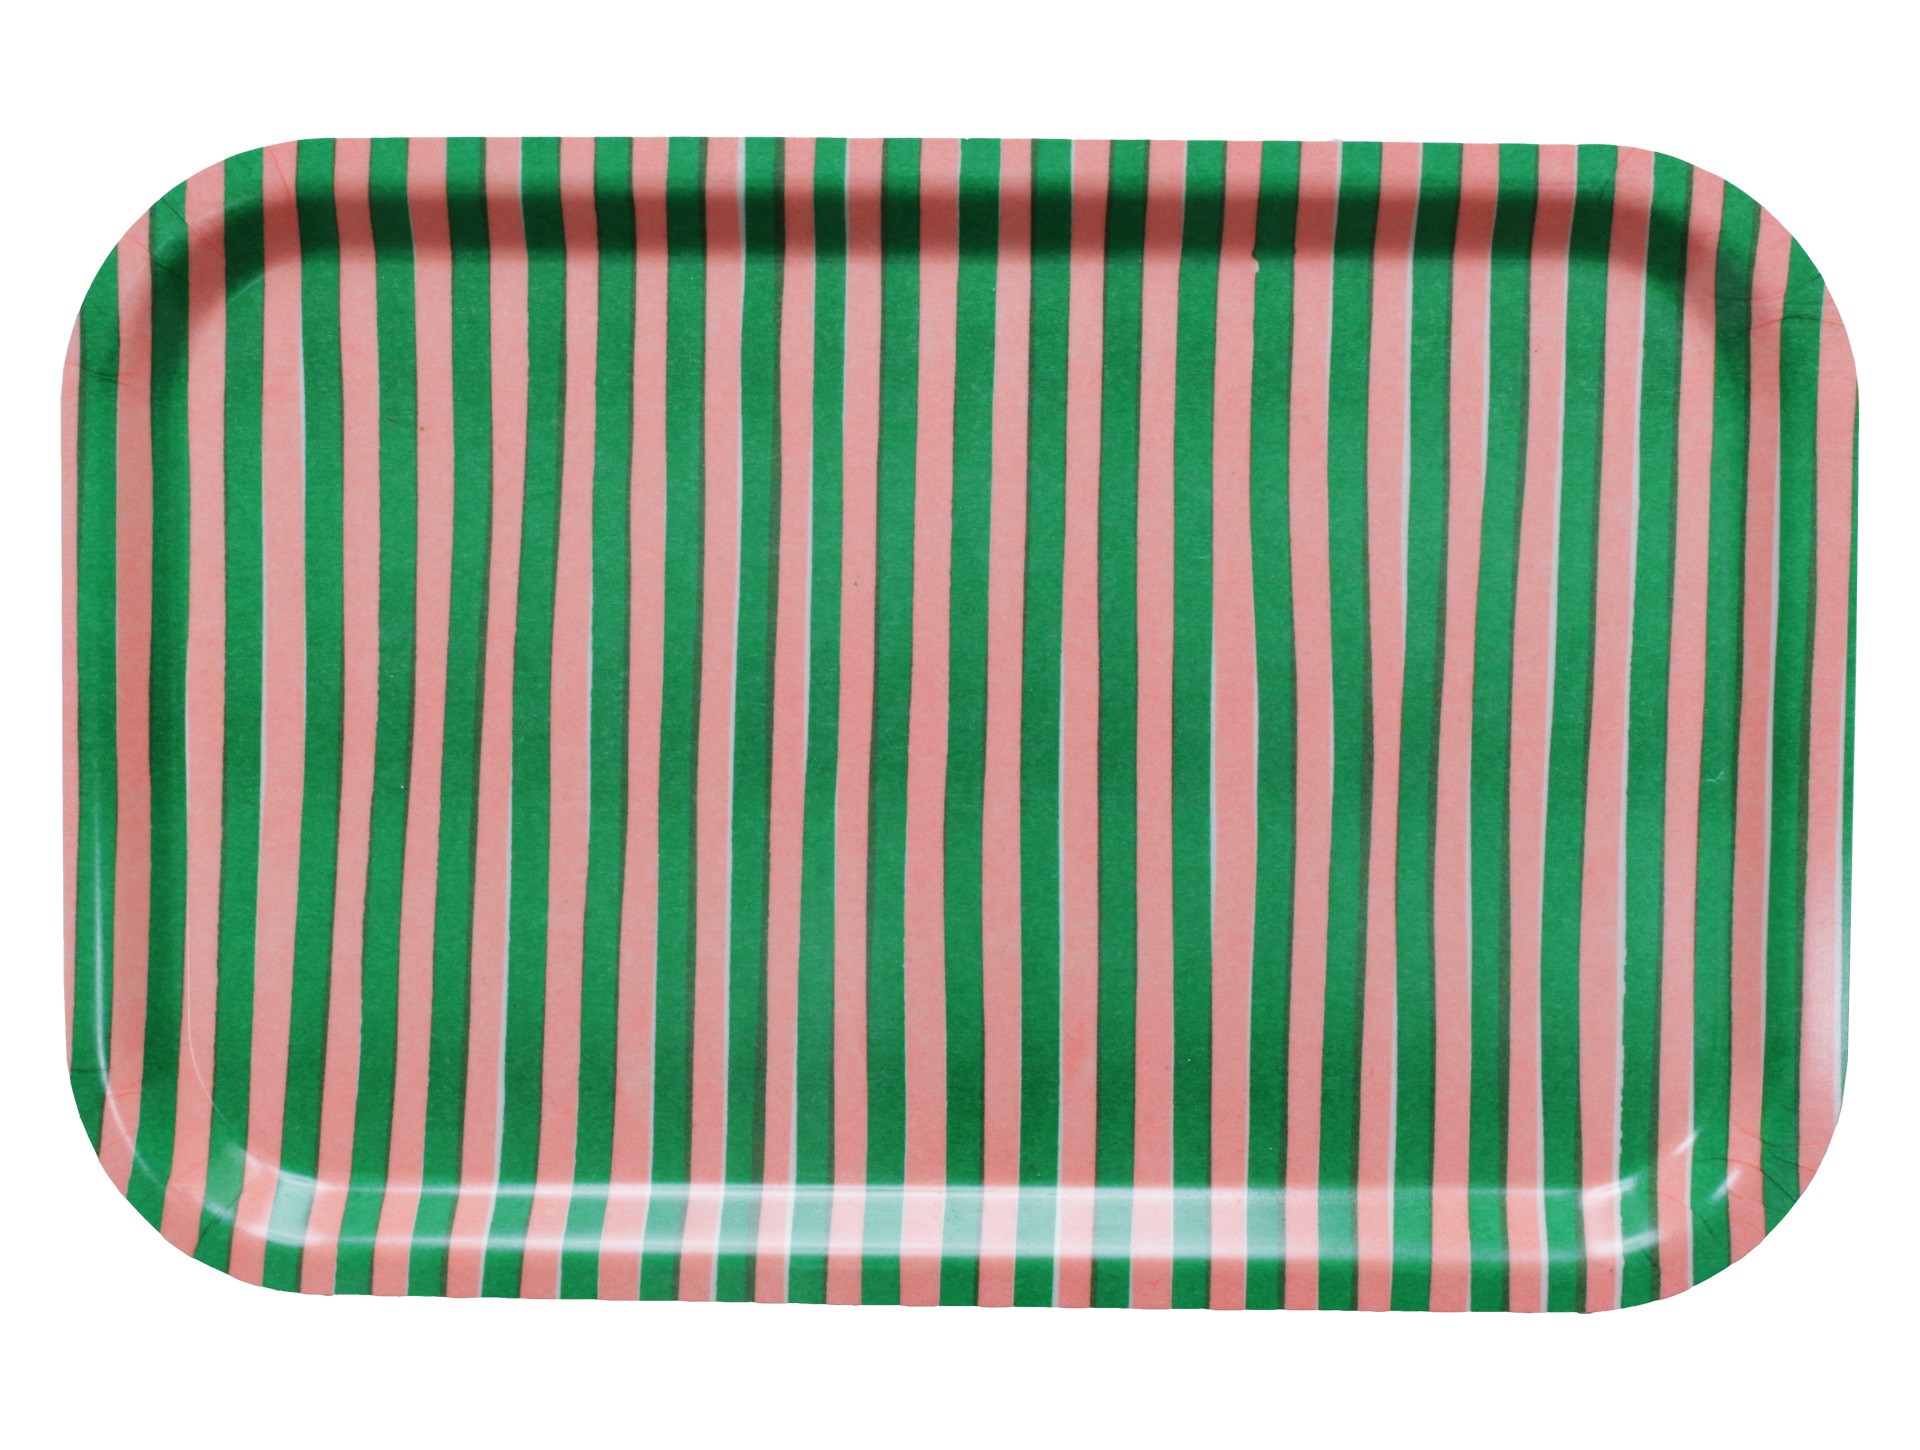 Tray stripes pink | green 33 x 21 cm.